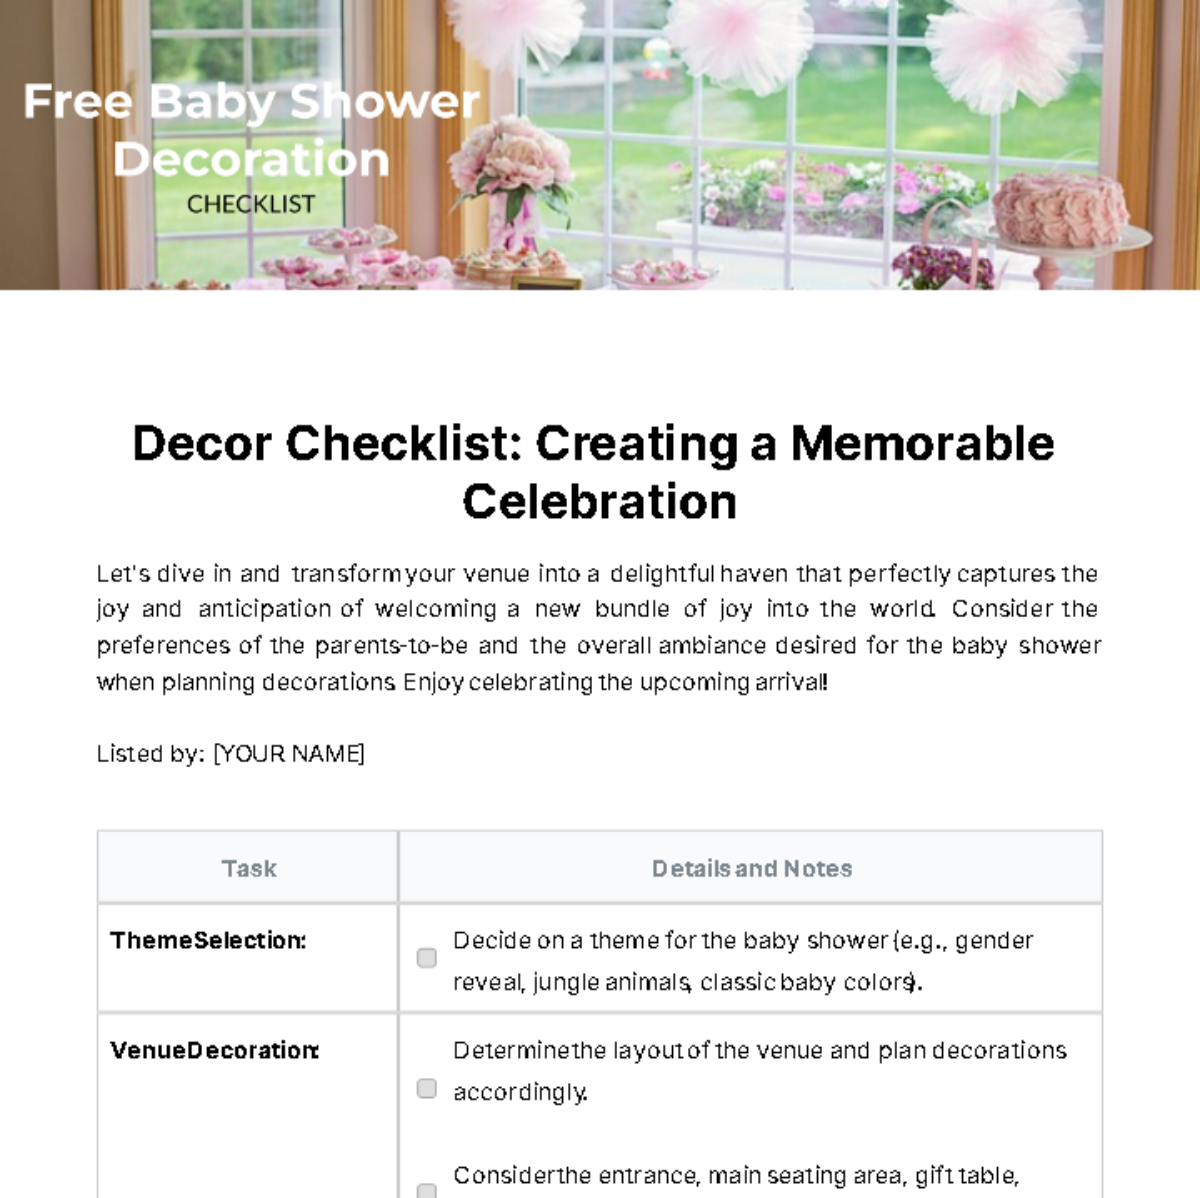 Free Baby Shower Decoration Checklist Template